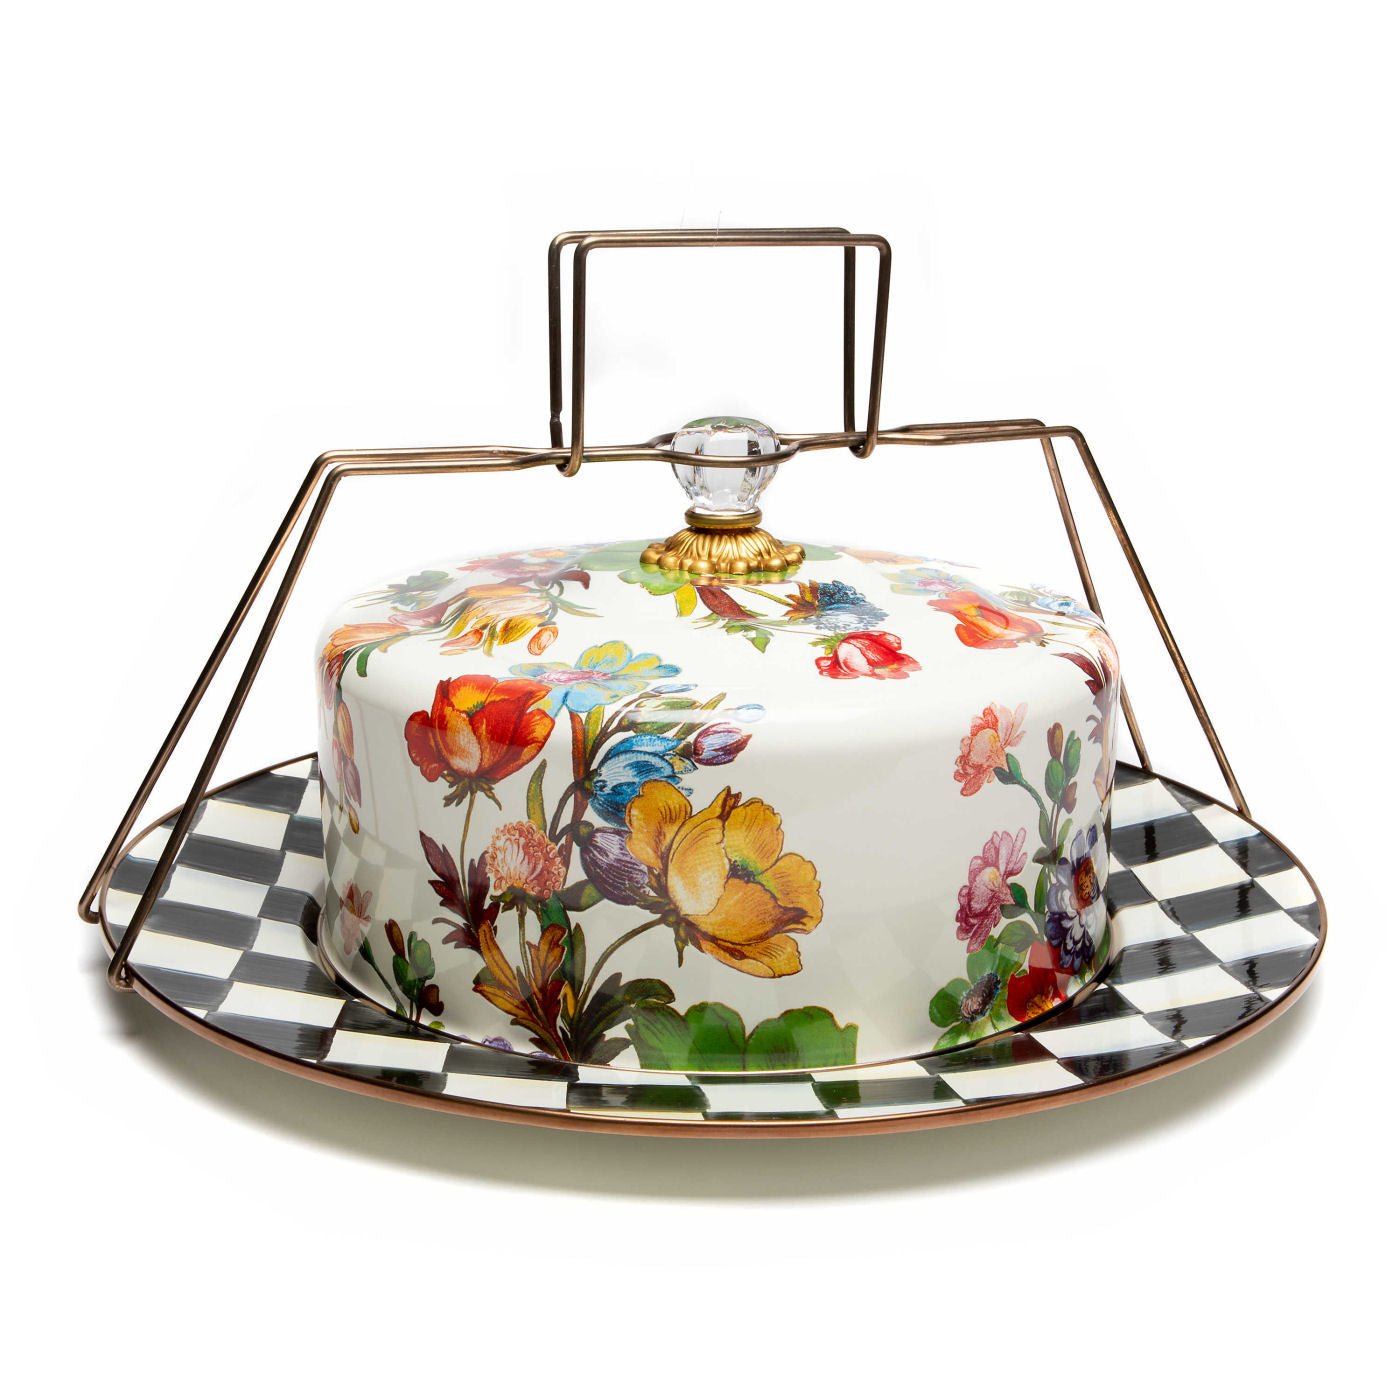 White Flower Market Cake Carrier by MacKenzie-Childs - |VESIMI Design|